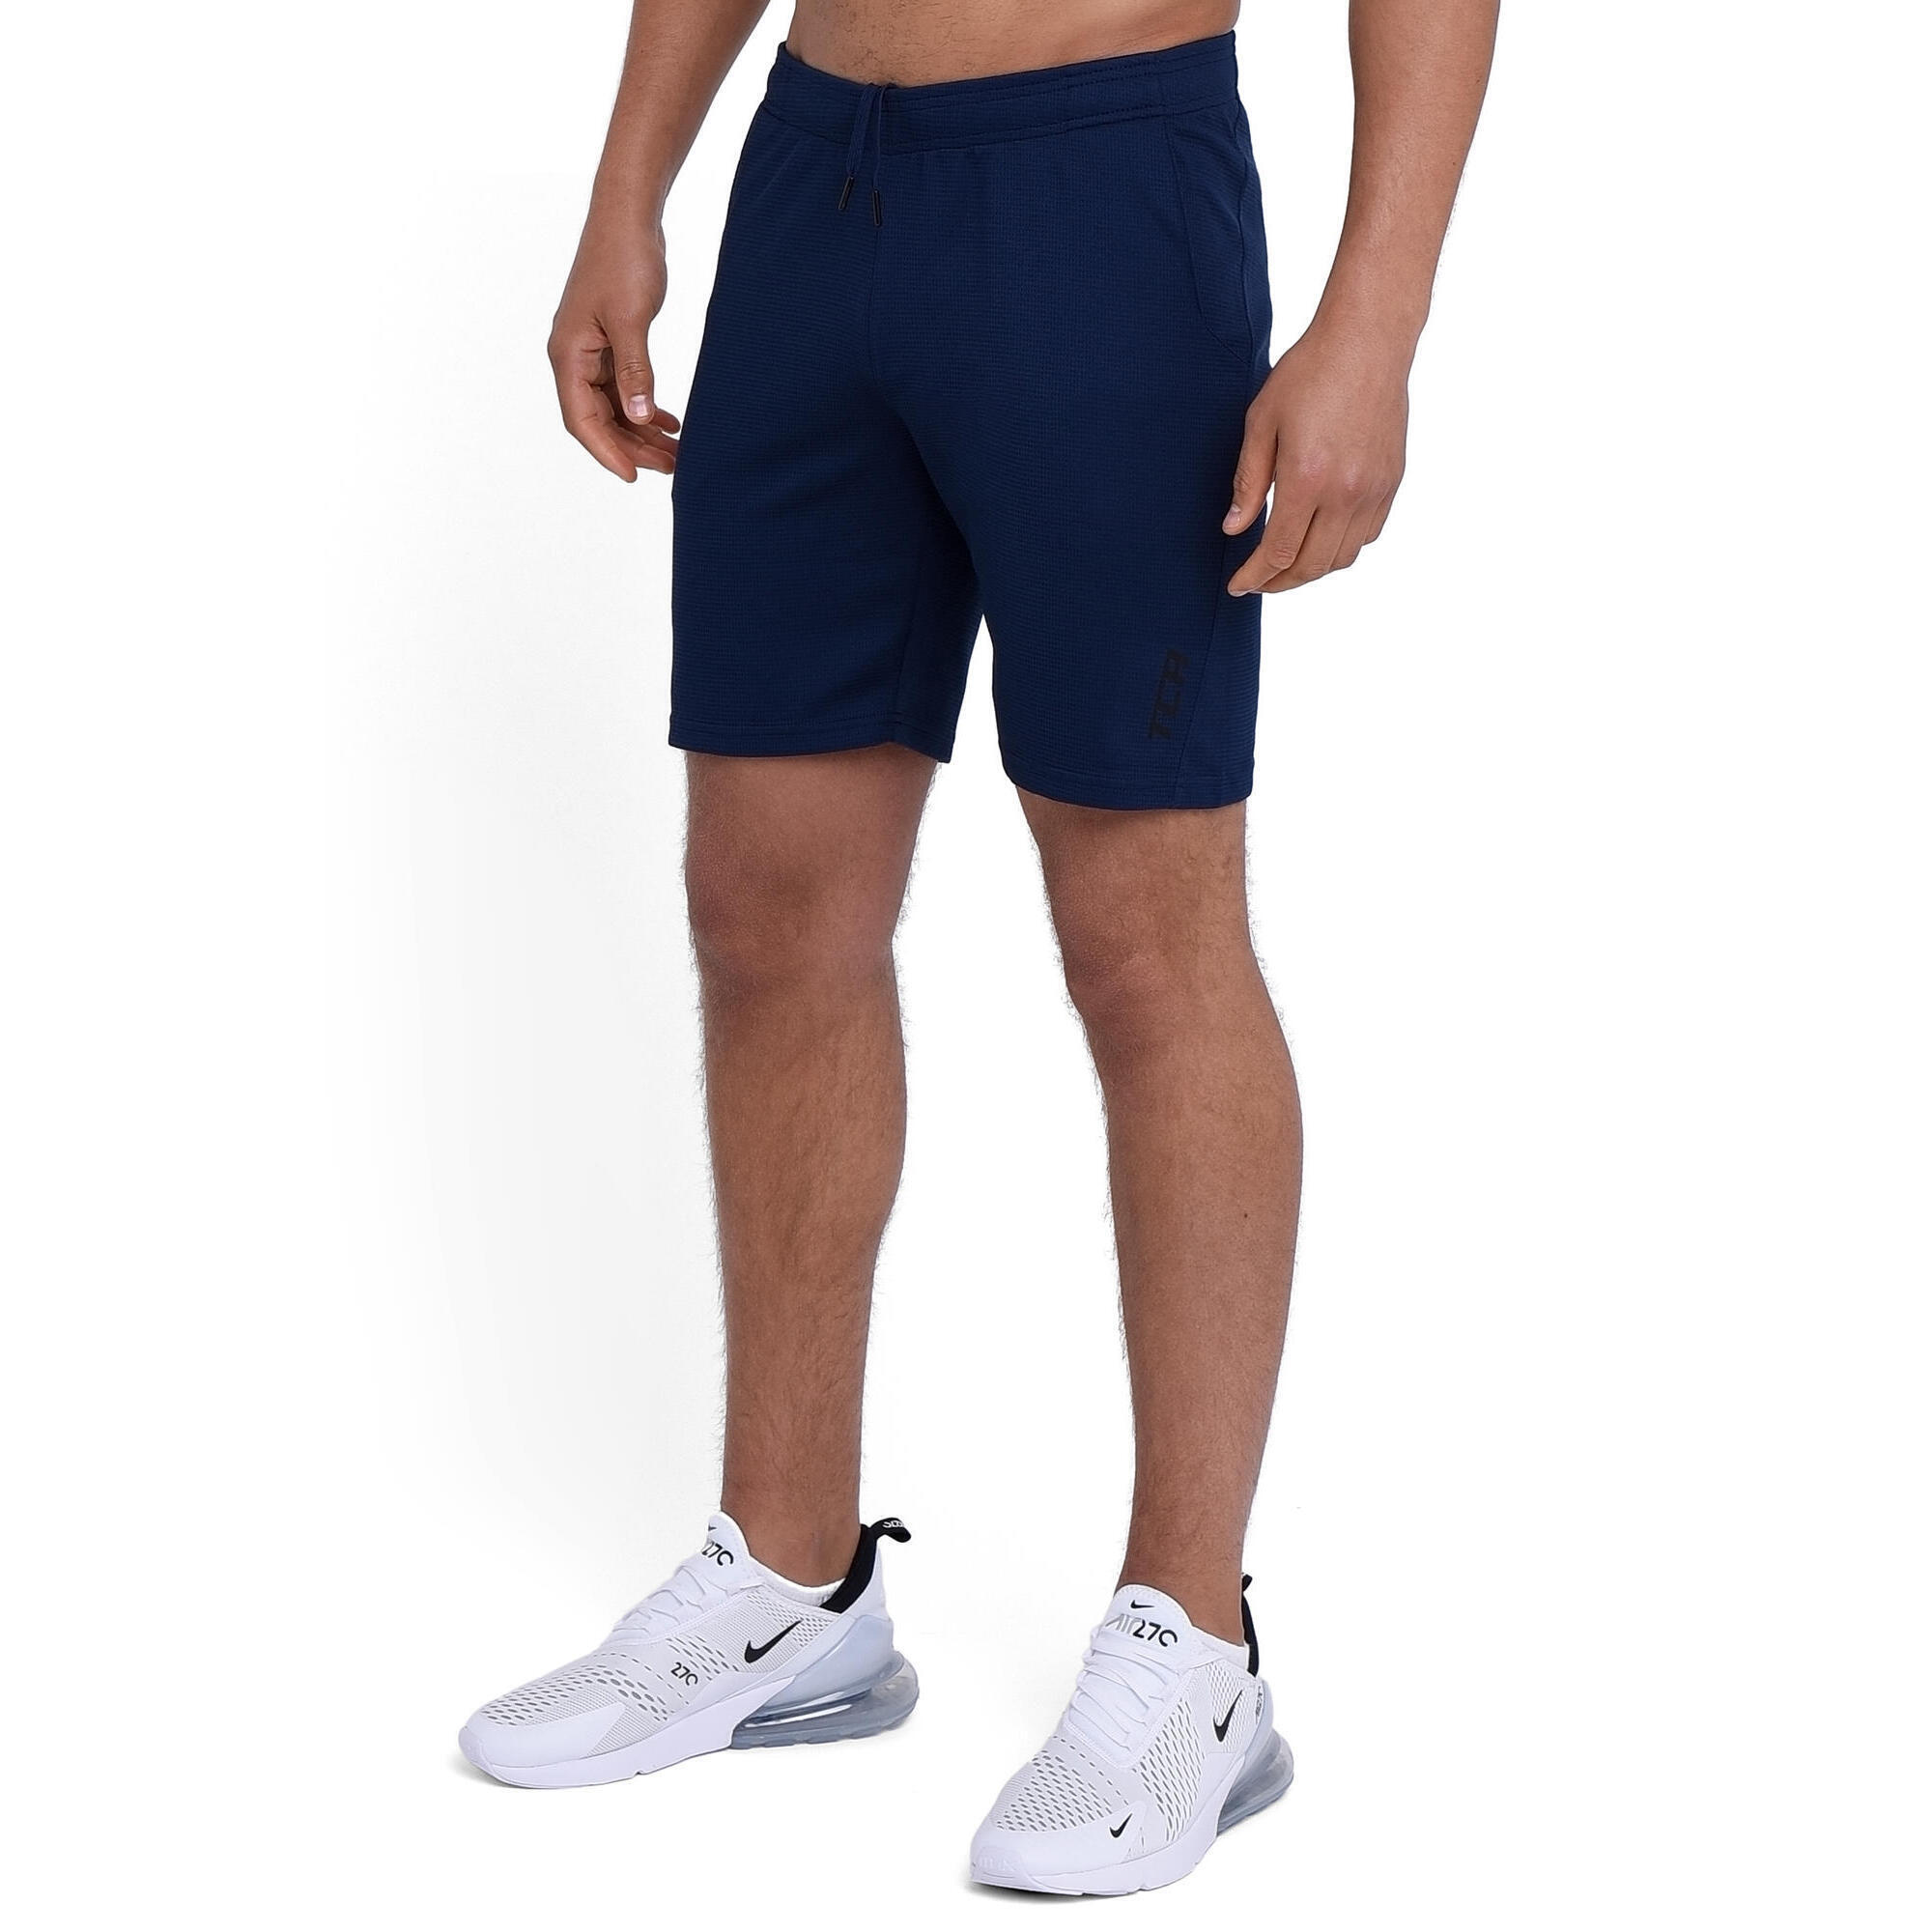 TCA Men's Aeron Running Shorts with Pockets - Navy Eclipse